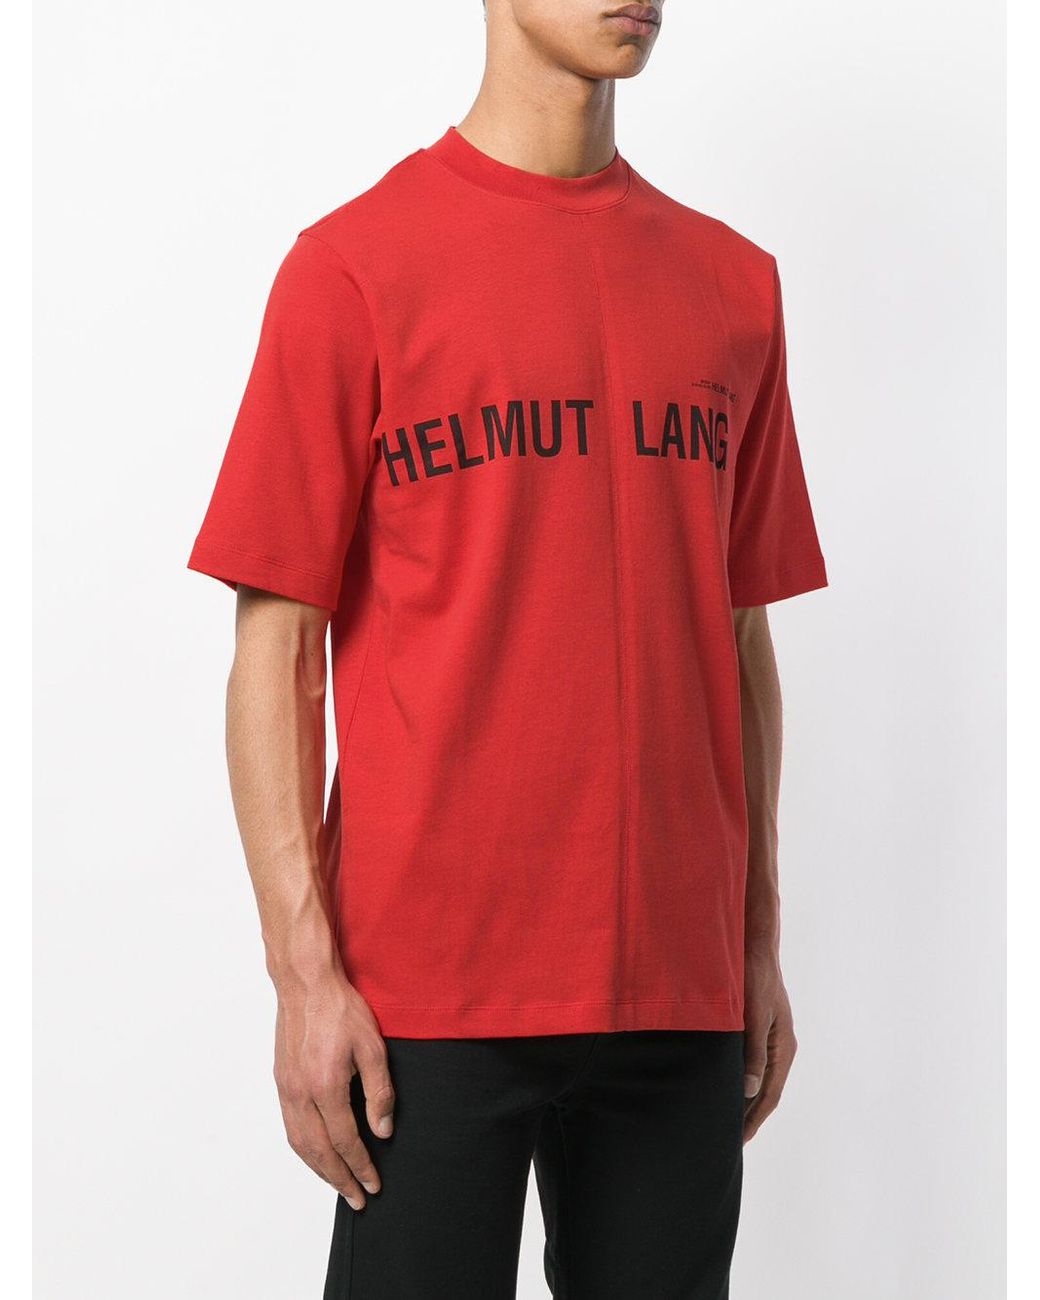 Helmut Lang Logo Printed T-shirt in Red for Men | Lyst